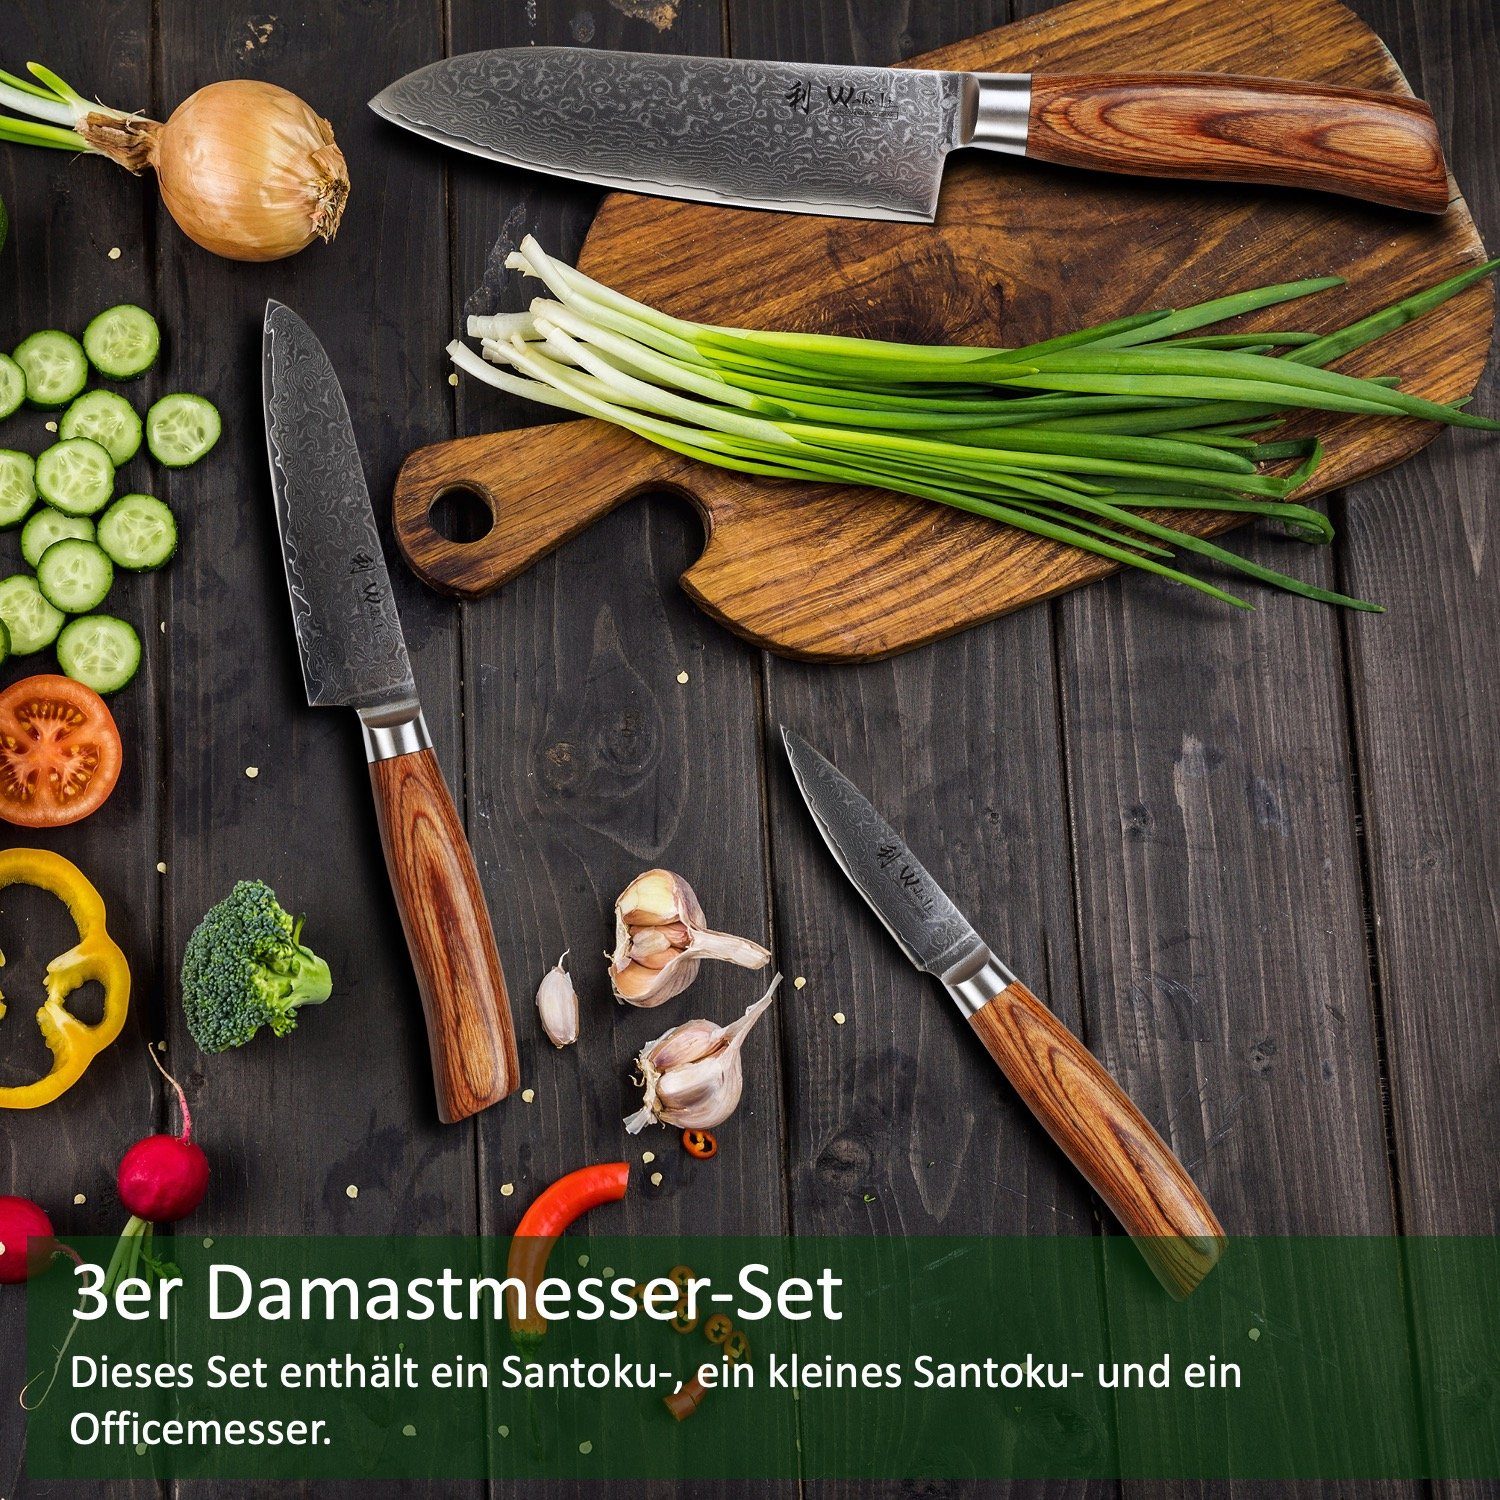 Wakoli Messer-Set Edib Pro 3er I I Holzbox Damastmesser-Set Pakkaholz 8-16cm I Klinge